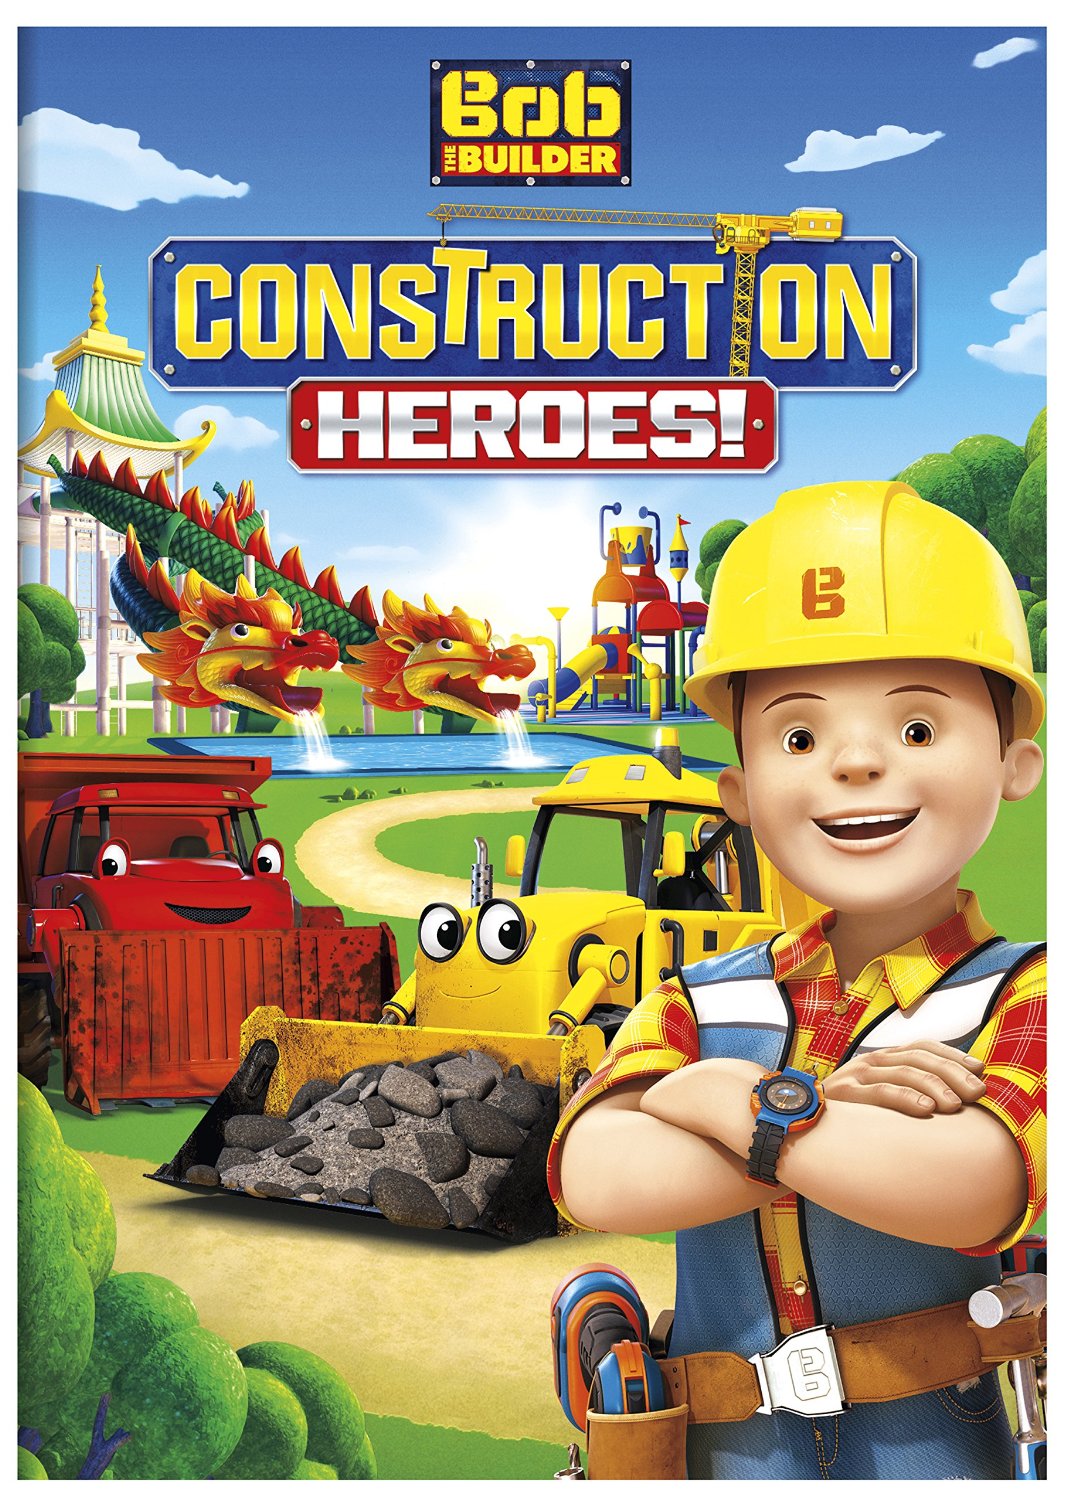 MOVIES I GOT!!!: BOB THE BUILDER - CONSTRUCTION HEROES